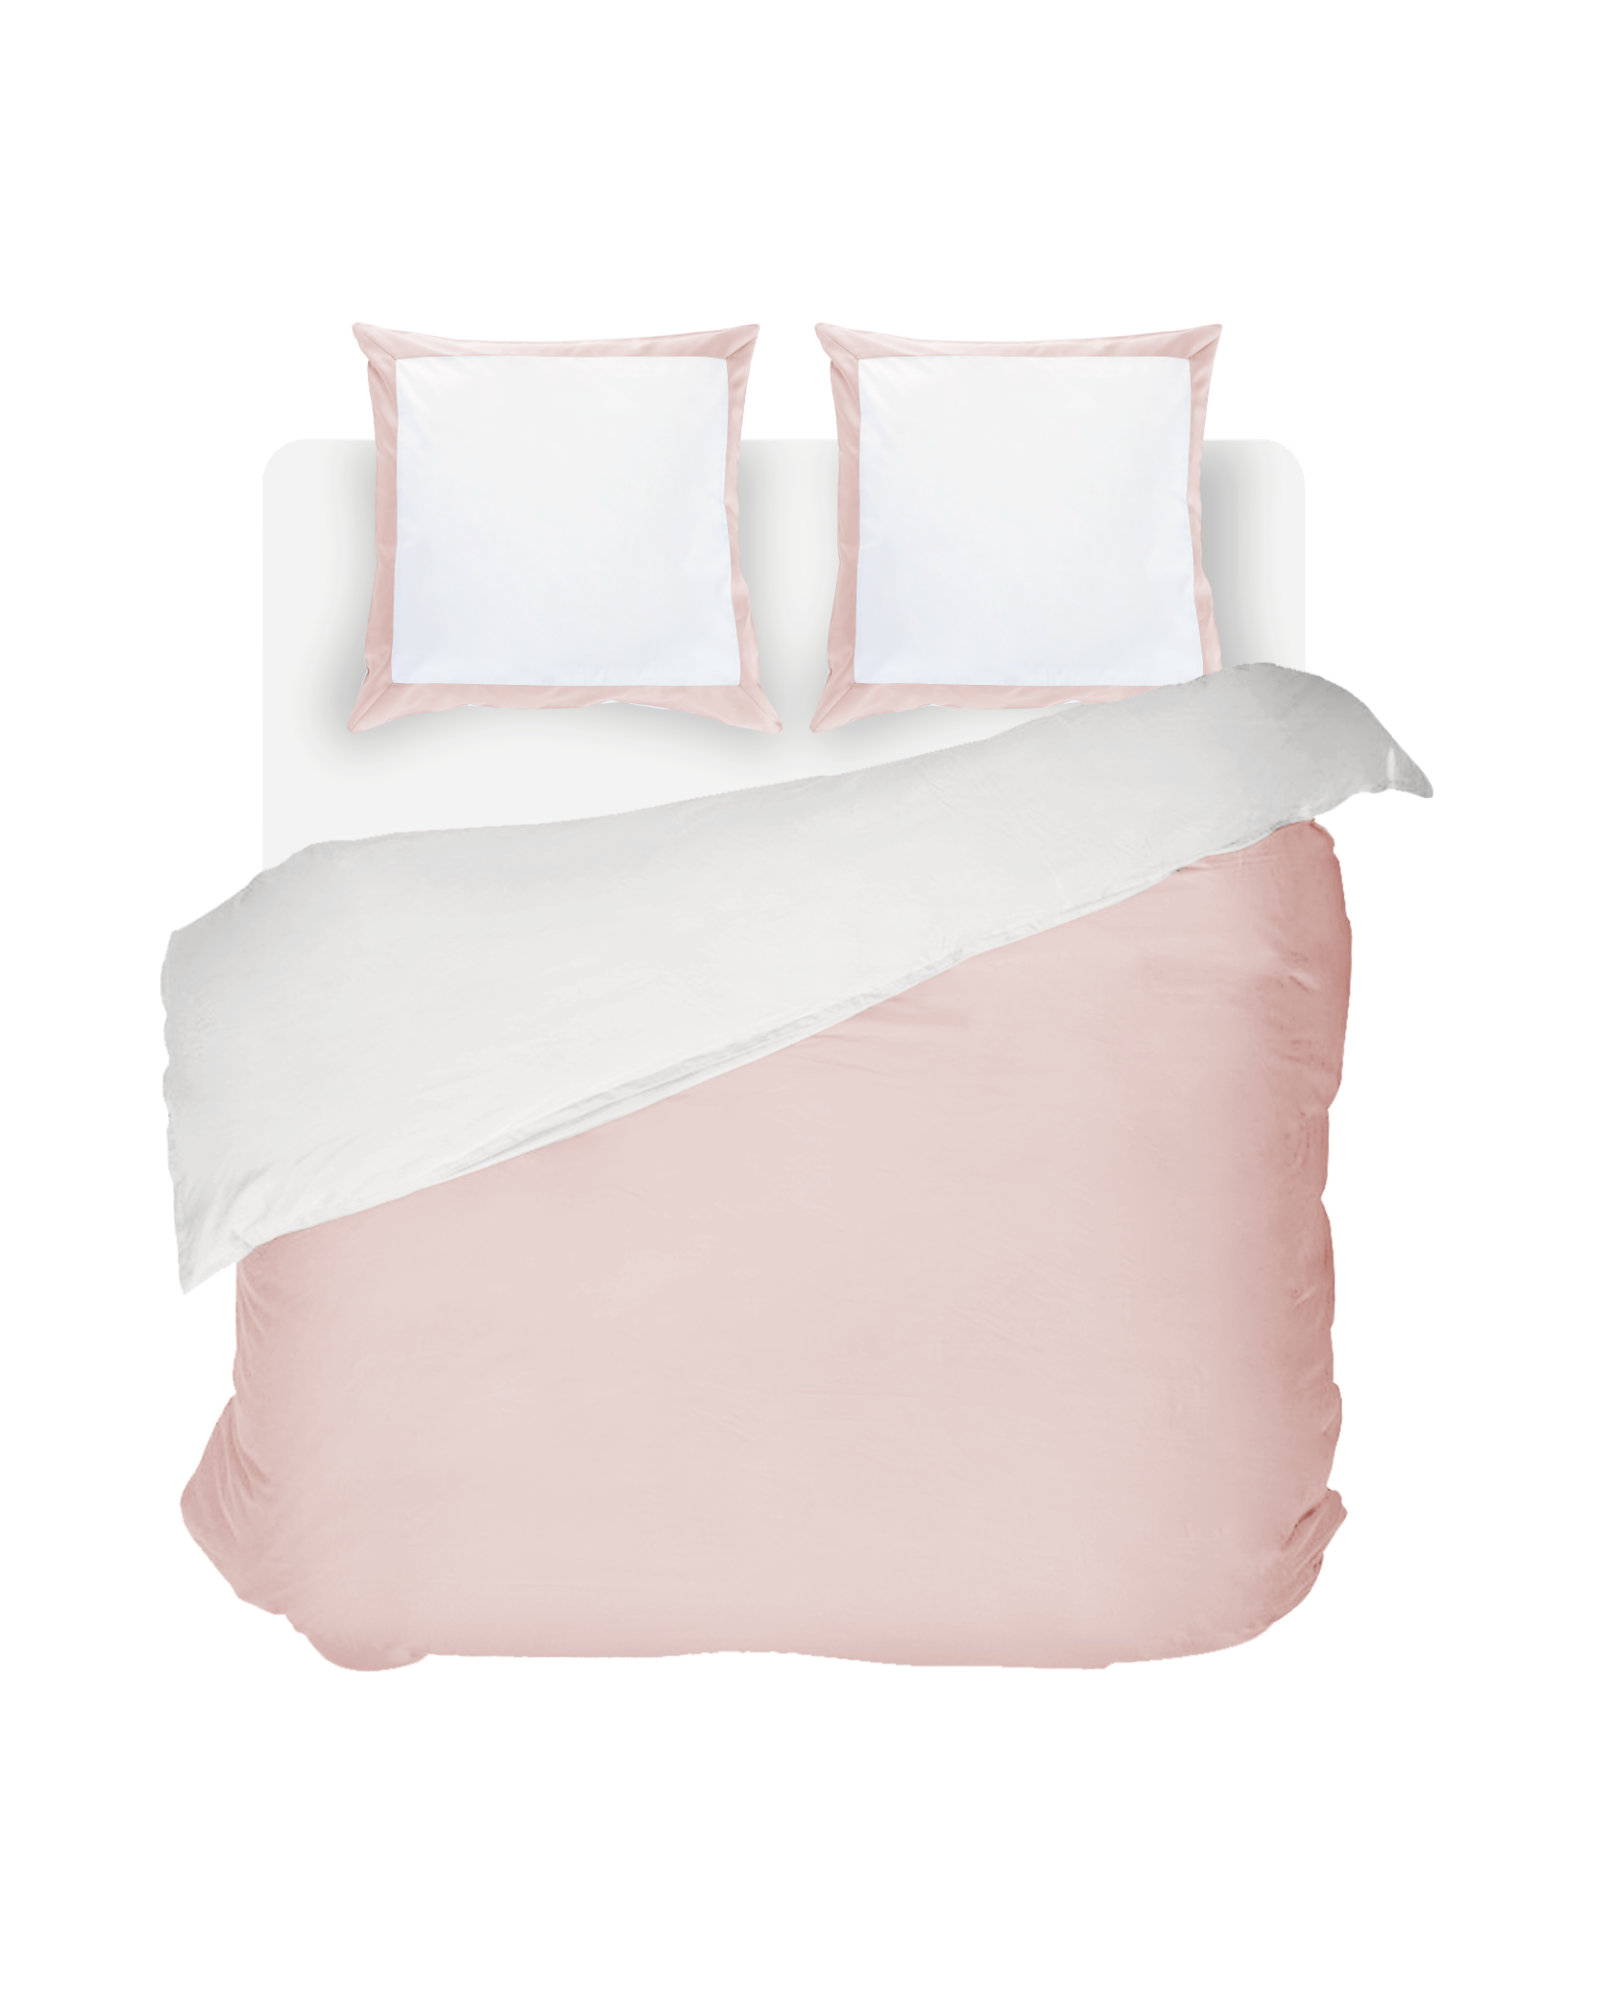 Bed linen set LIMOGES White/Blush